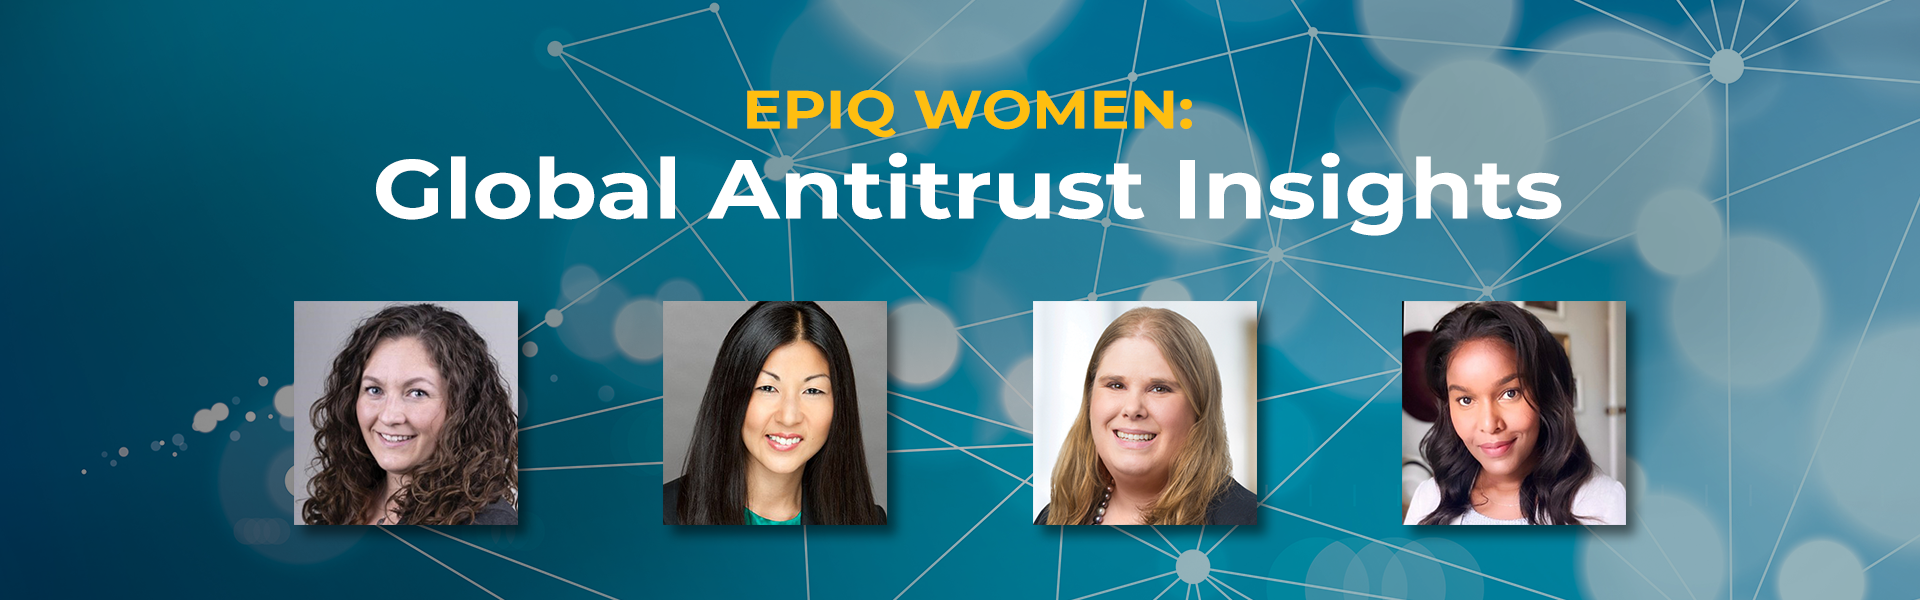 Epiq Women: Global Antitrust Insights